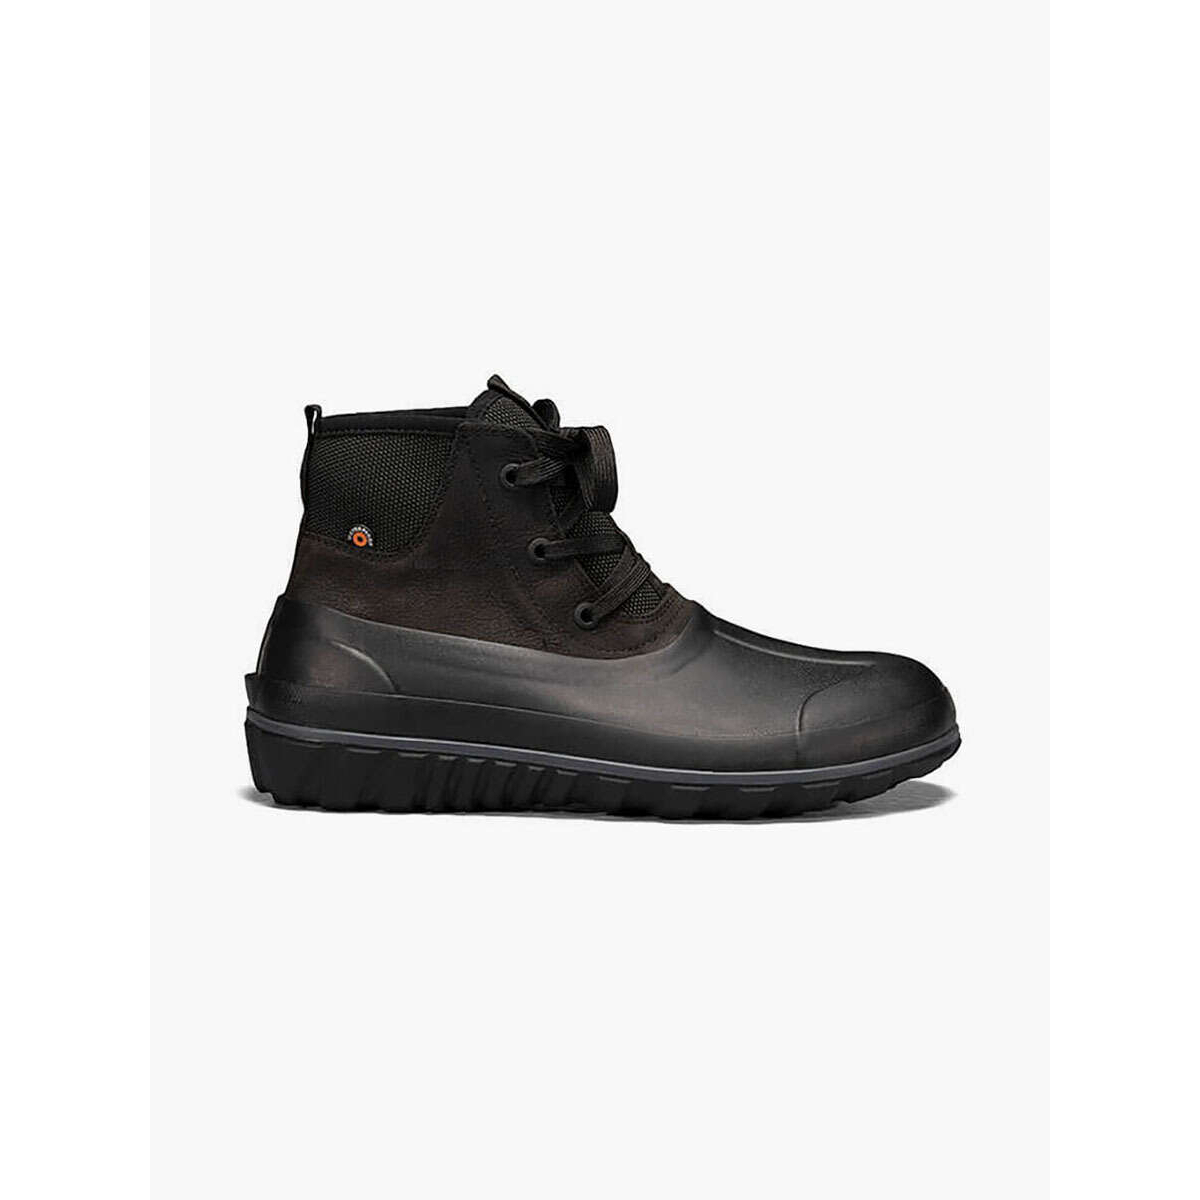 BOGS Men's Casual Lace Waterproof Leather Snow Boots Black - 72620-001 001 Black - 001 Black, 13-M